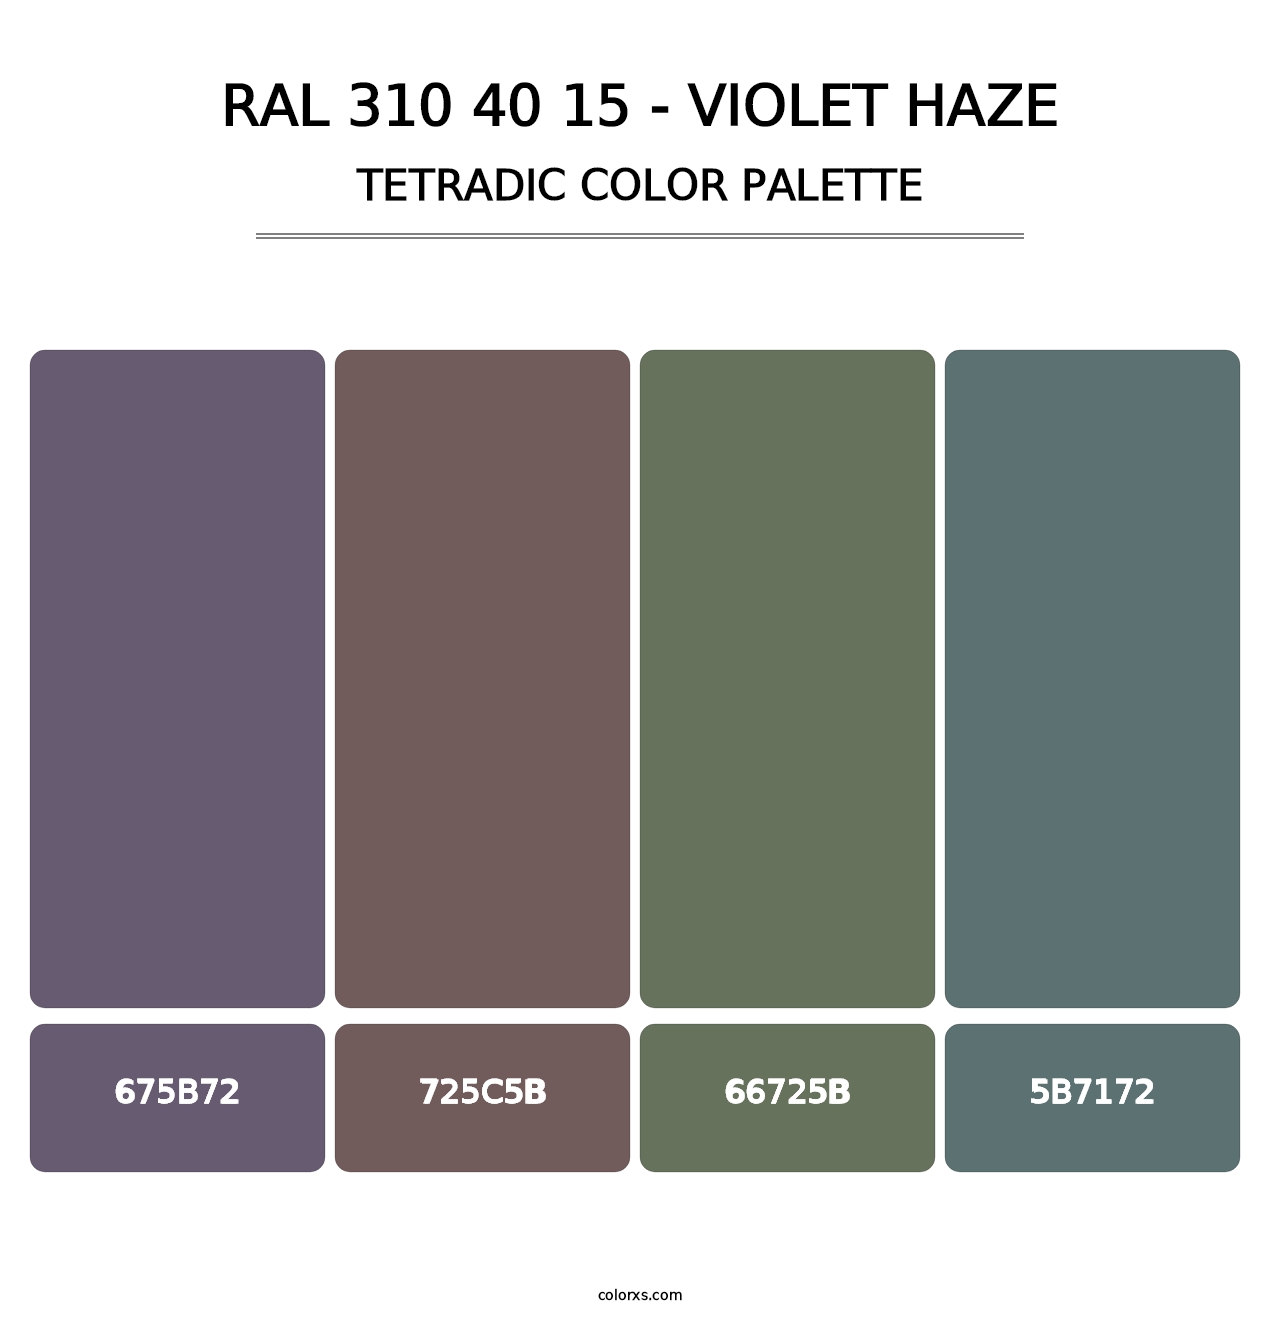 RAL 310 40 15 - Violet Haze - Tetradic Color Palette